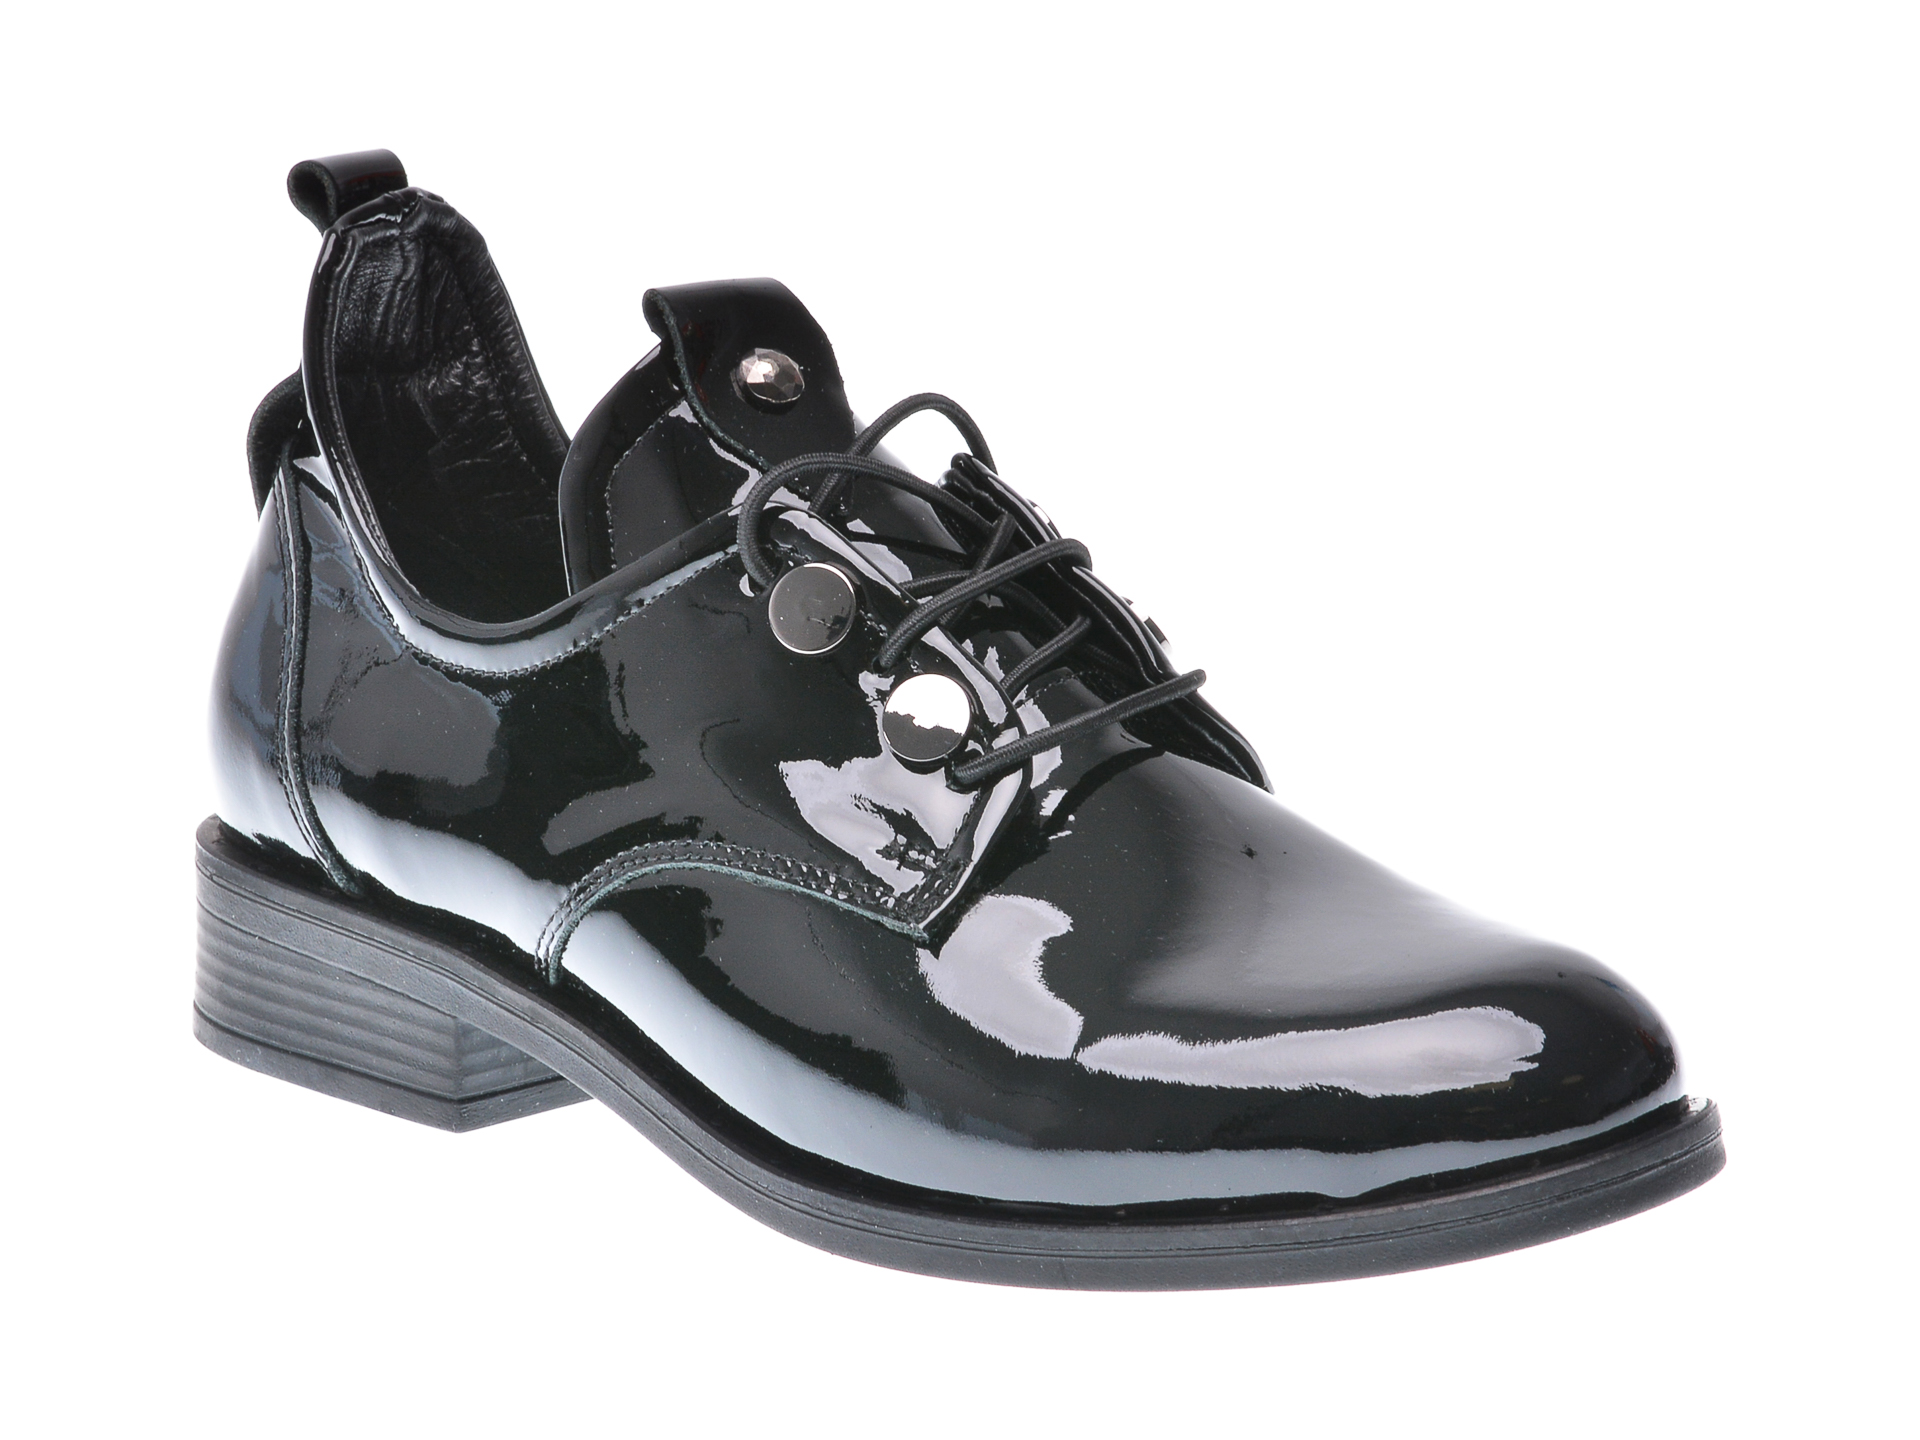 Pantofi FLAVIA PASSINI negri, Ms830, din piele naturala lacuita